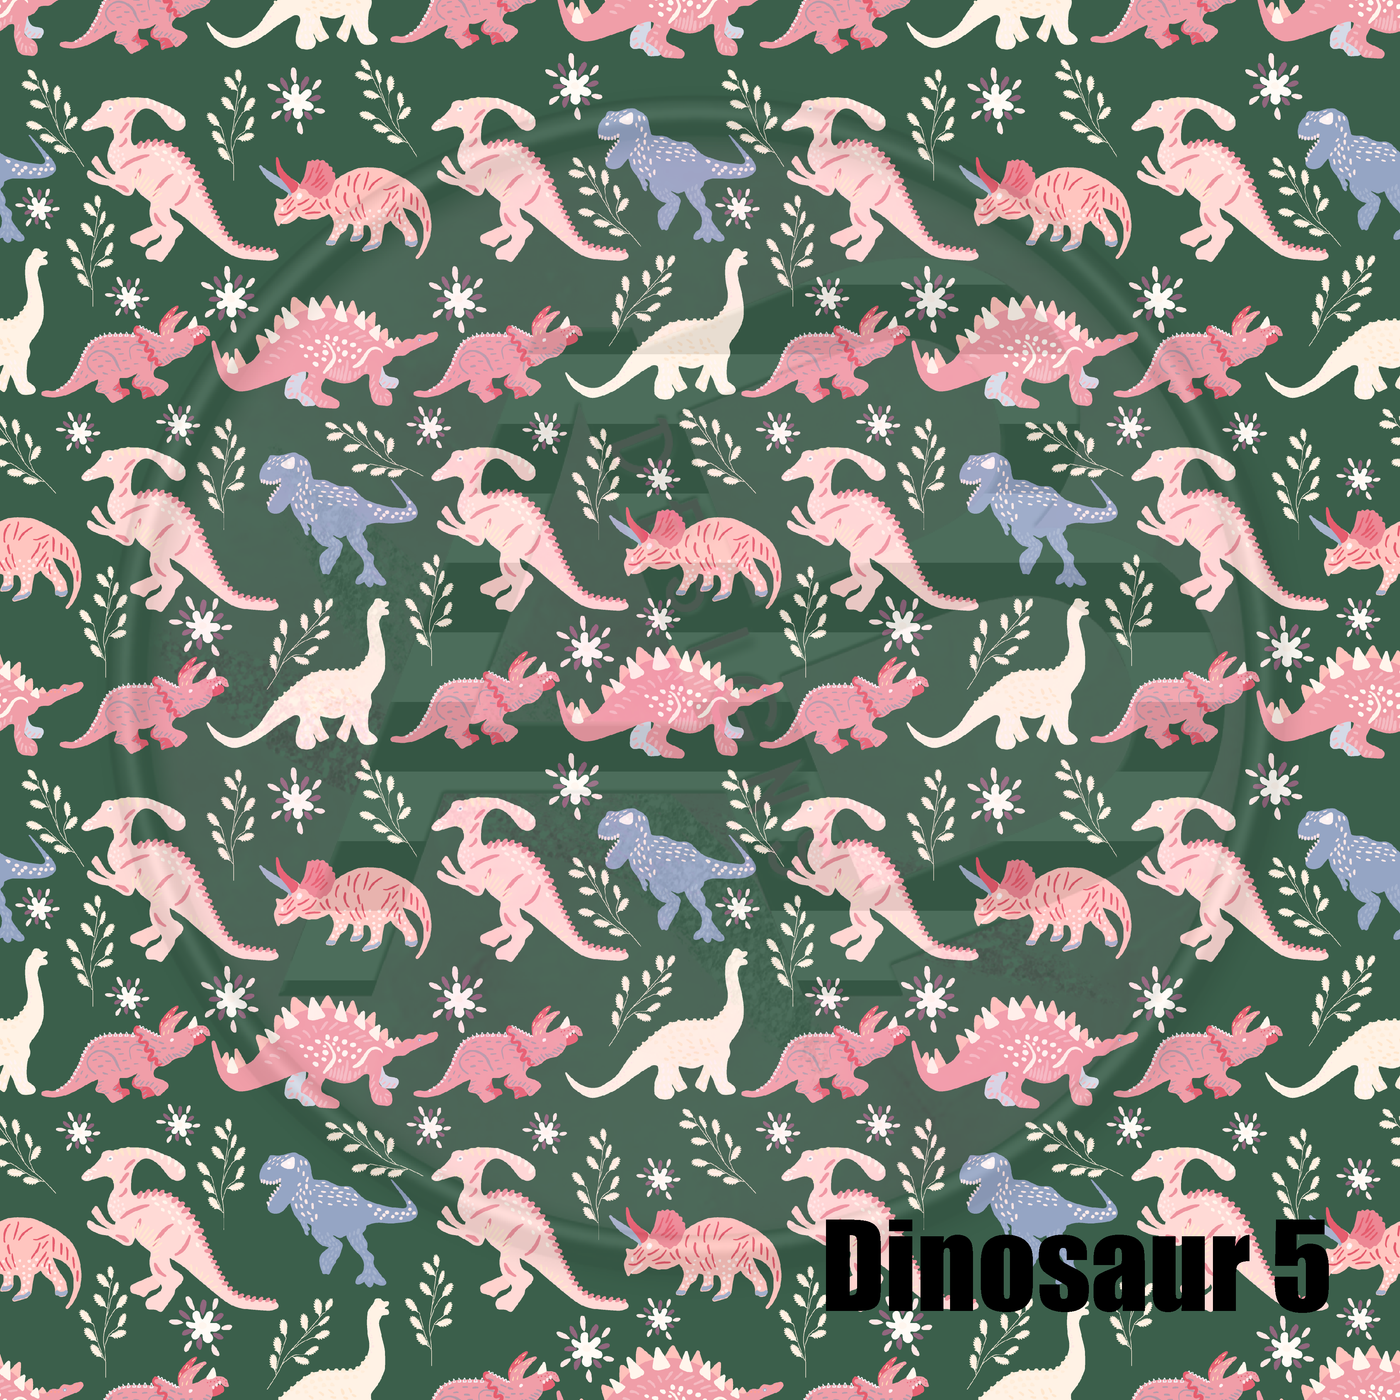 Adhesive Patterned Vinyl - Dinosaur 5